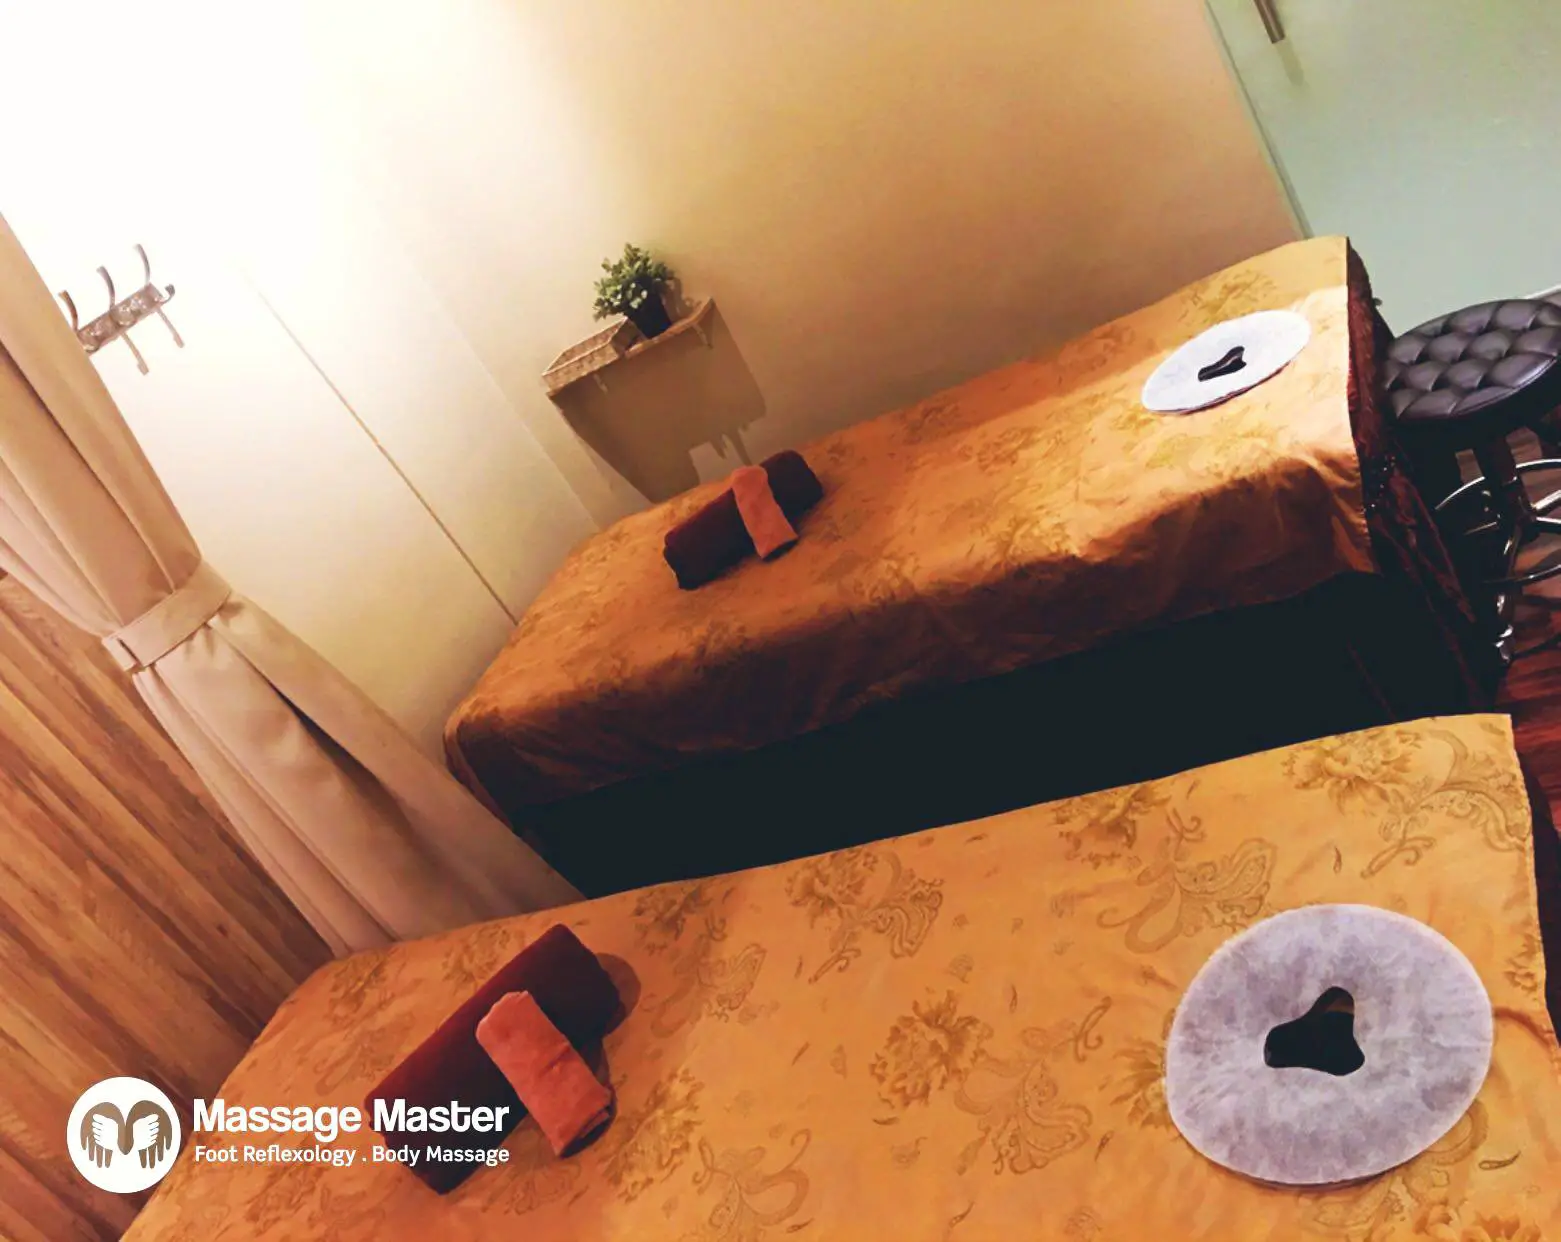 Massage Master Singapore